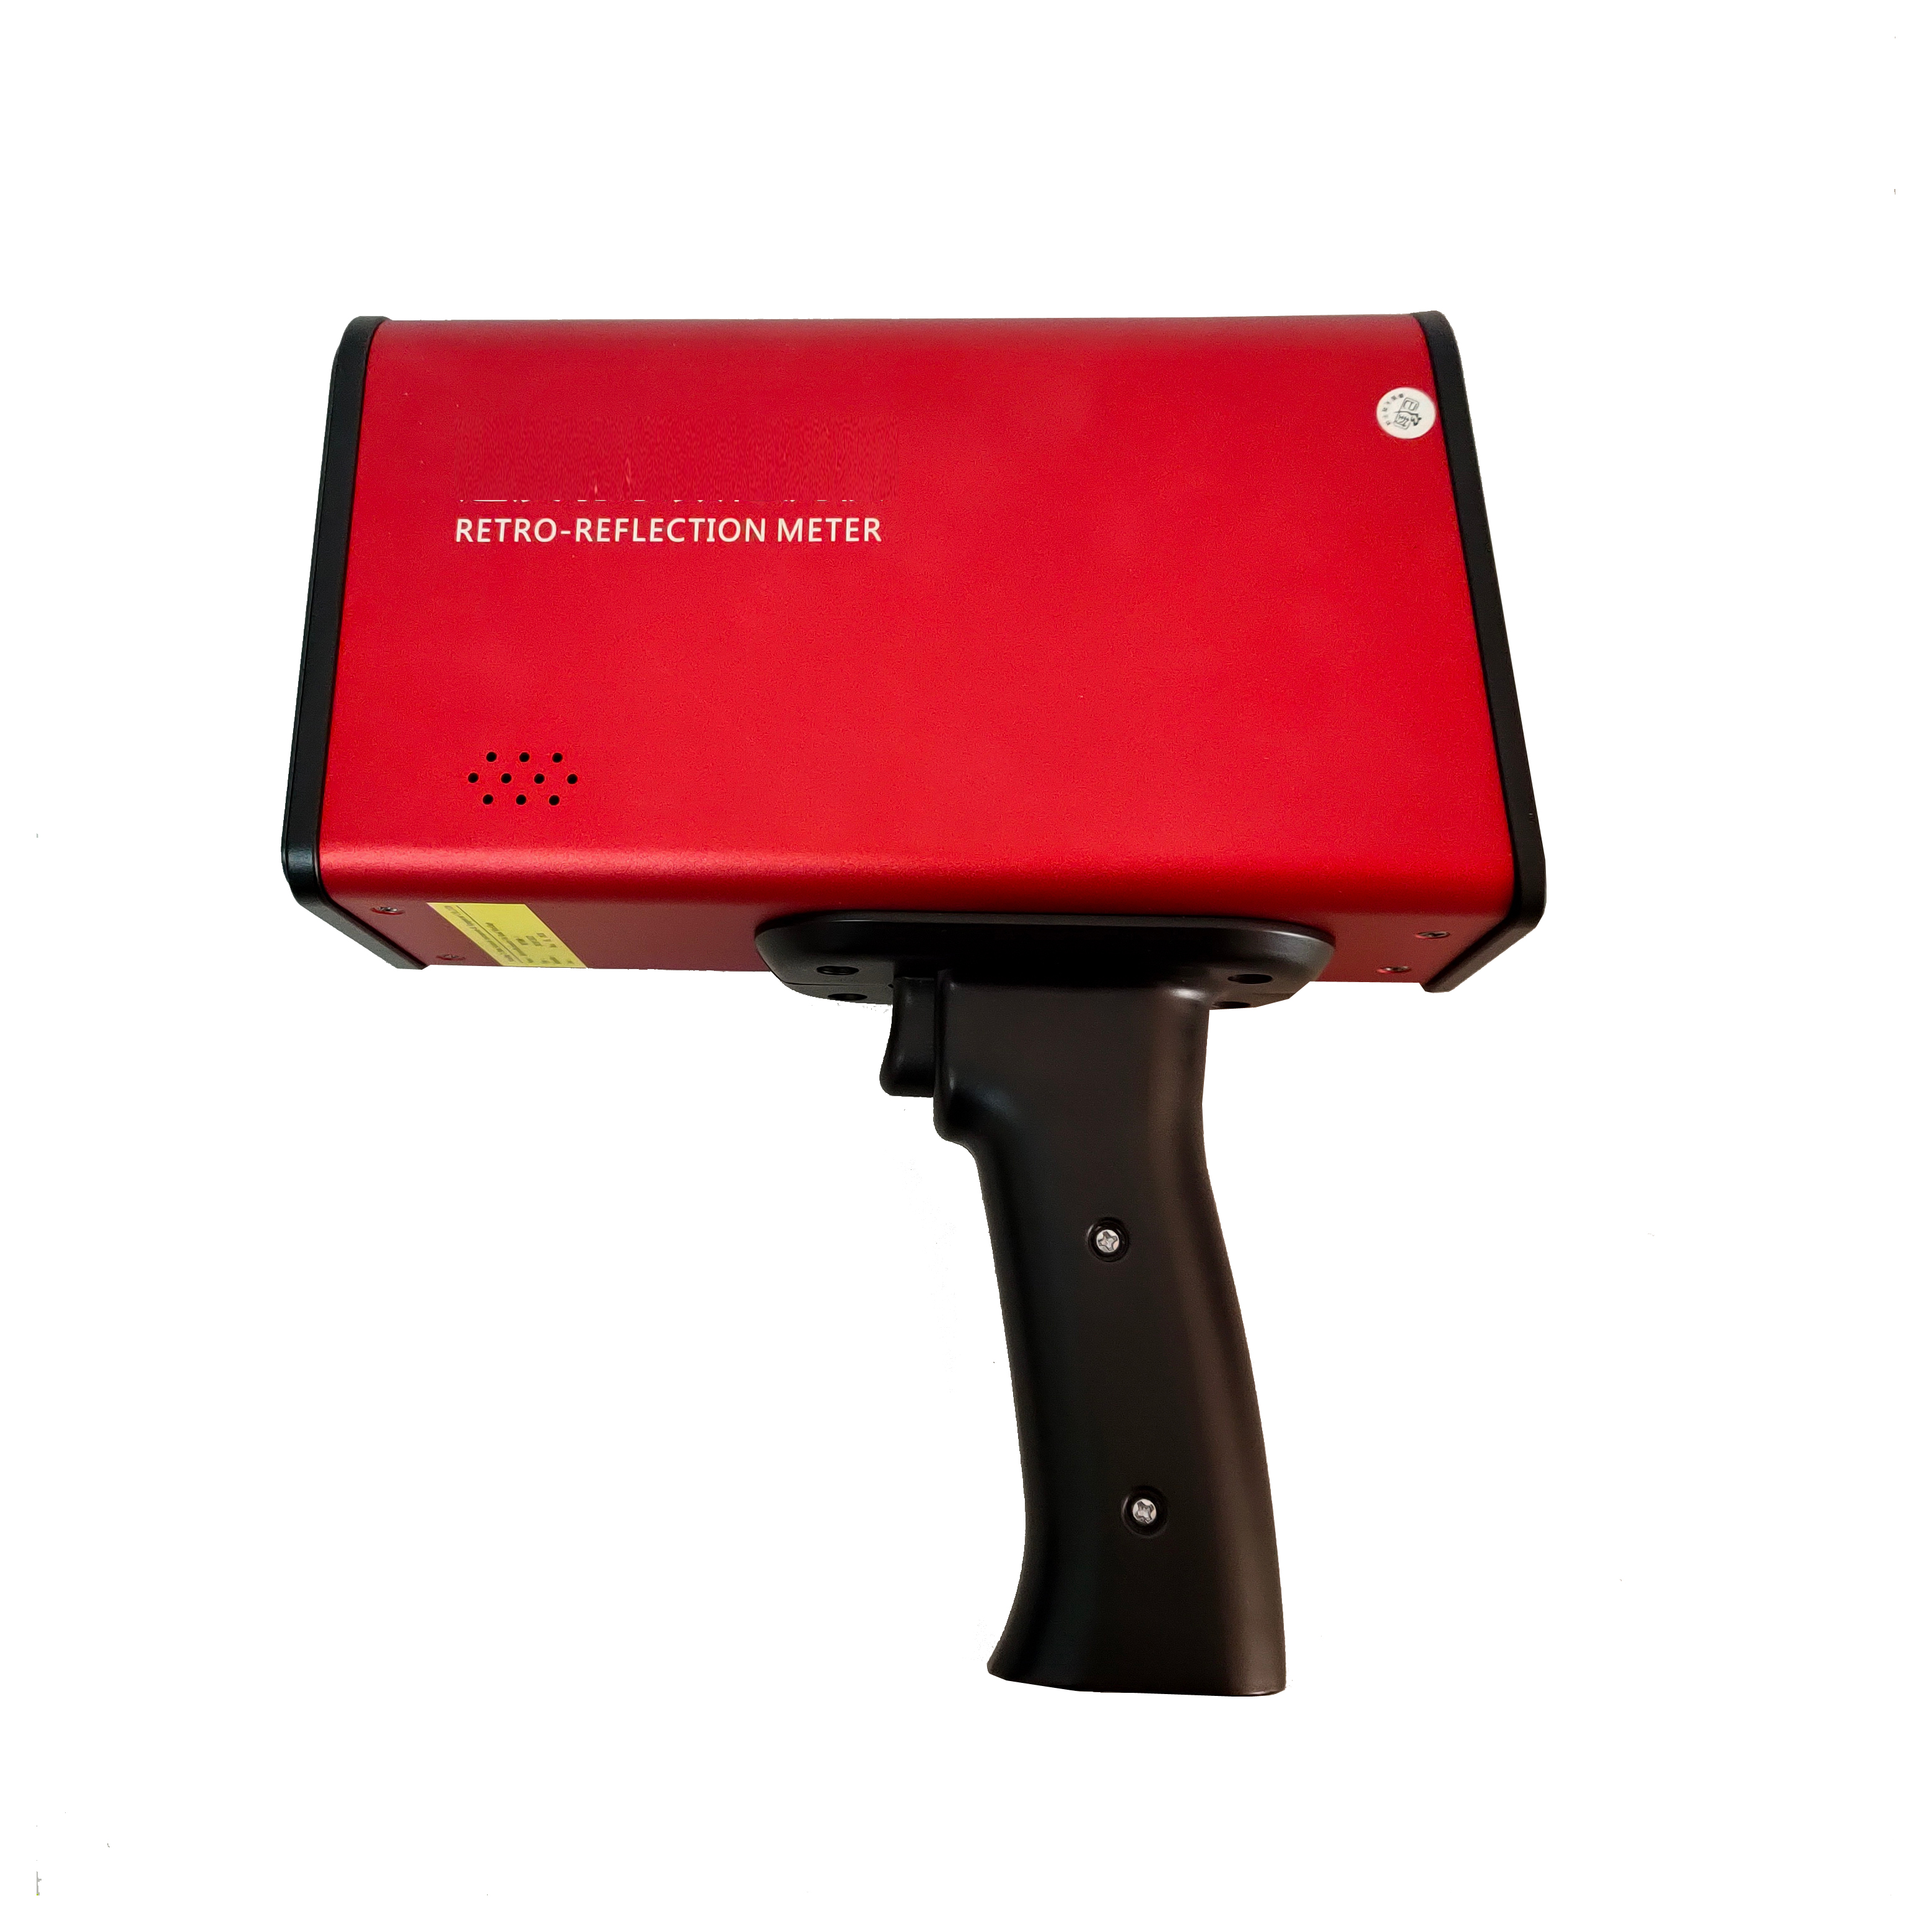 Retrorreflectómetro de calibre portátil para señalización vial